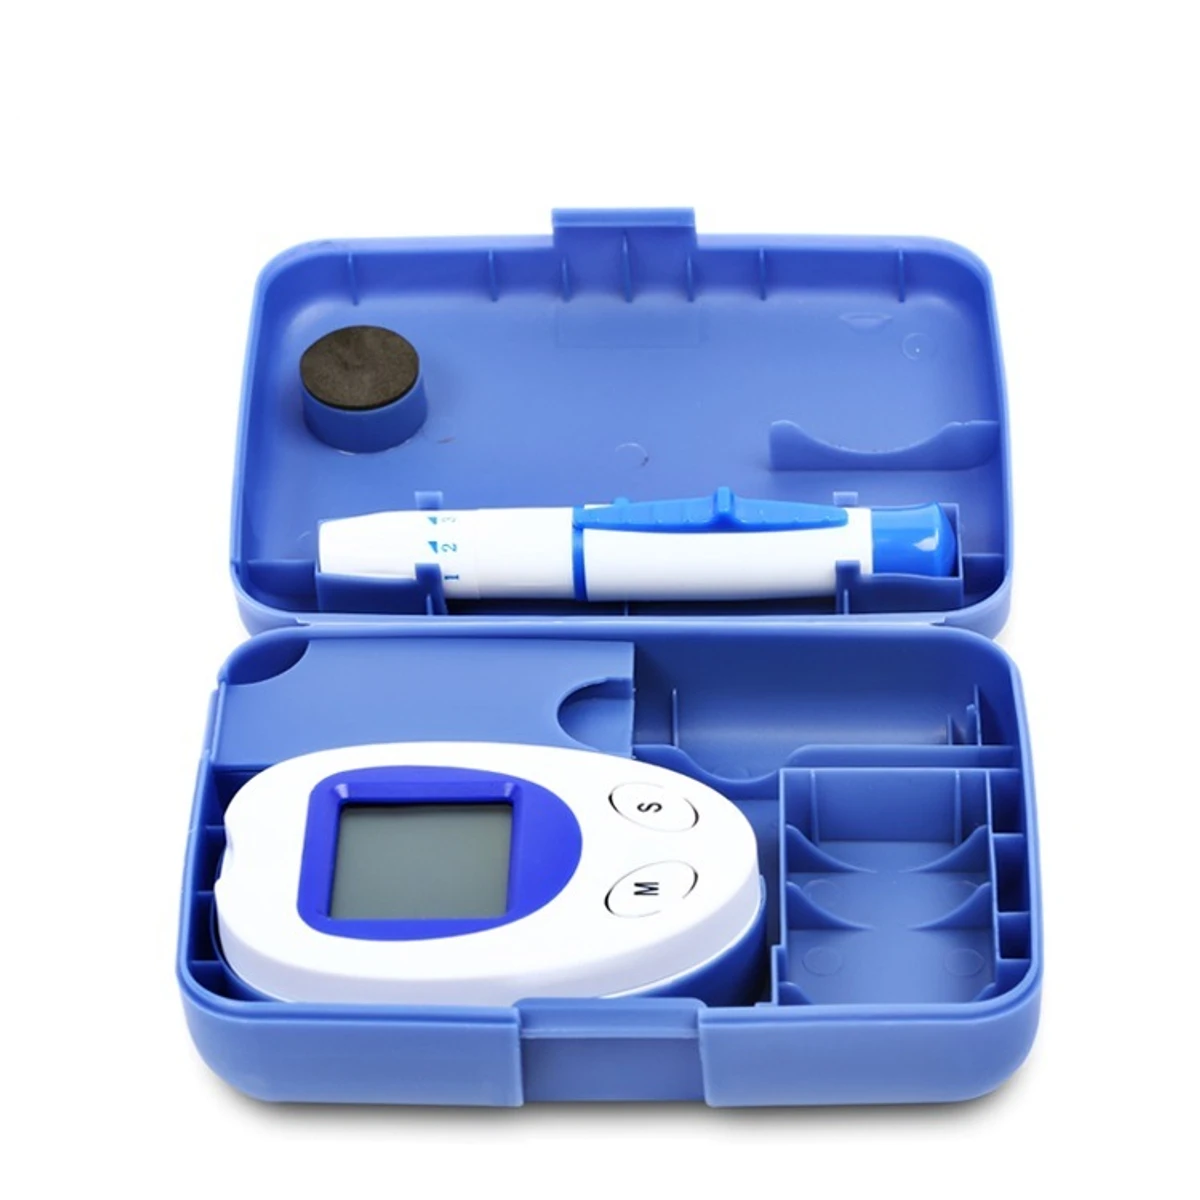 Accu Chek Instants Blood Glucose Monitor digital meter